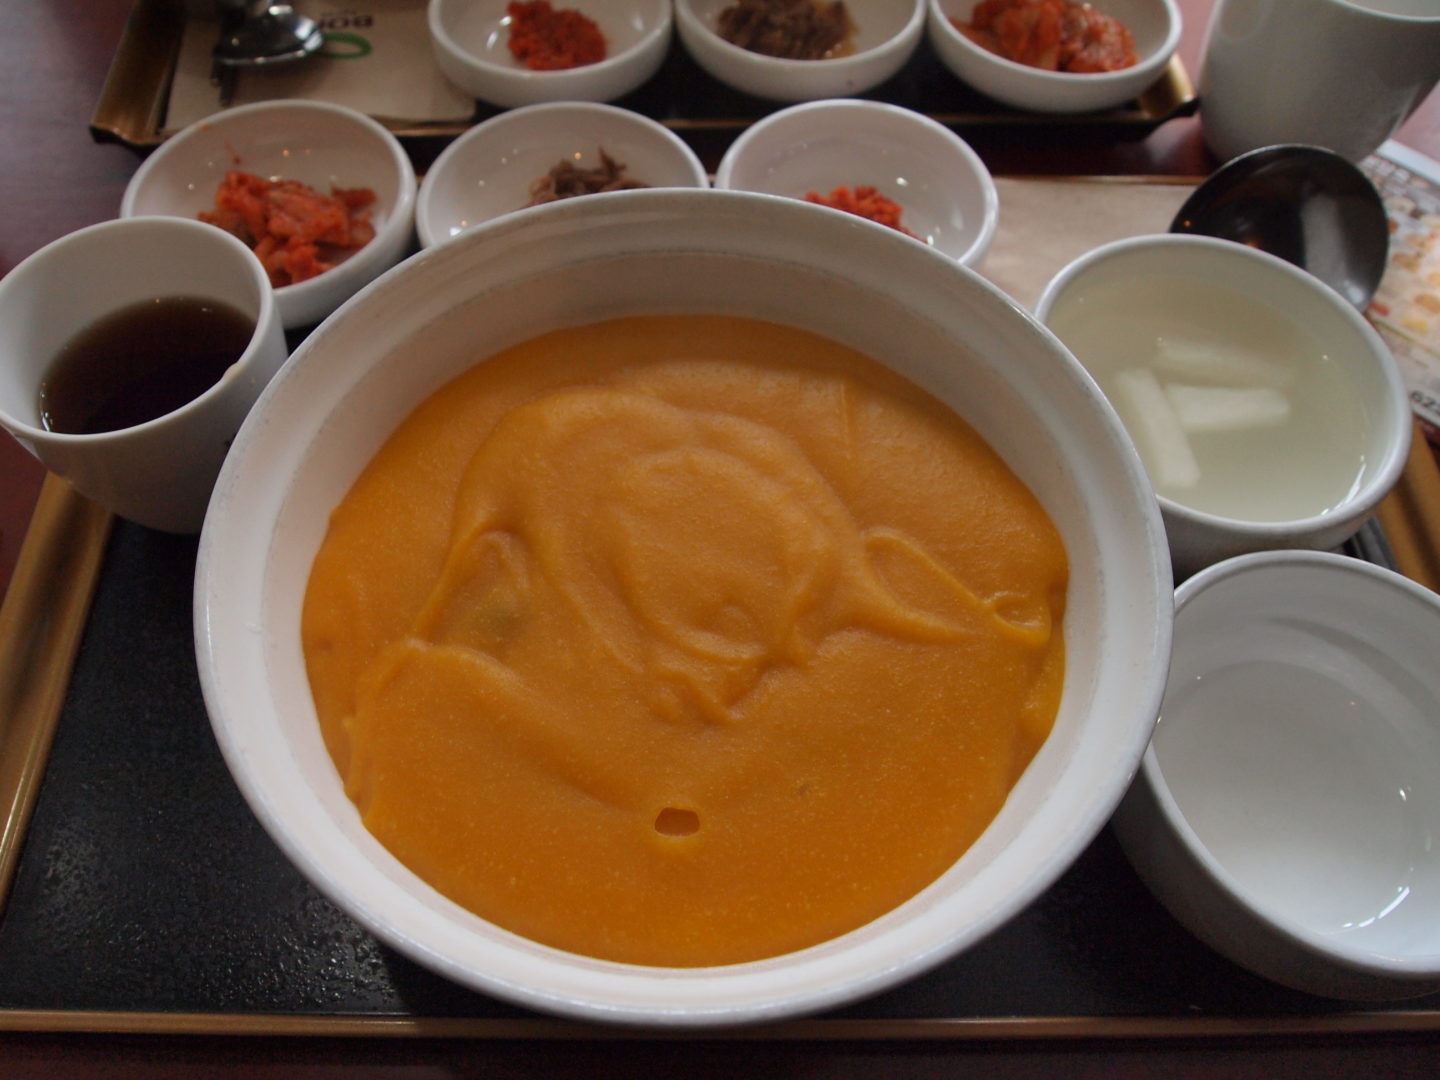 koreanski kleik ryzowy yuk